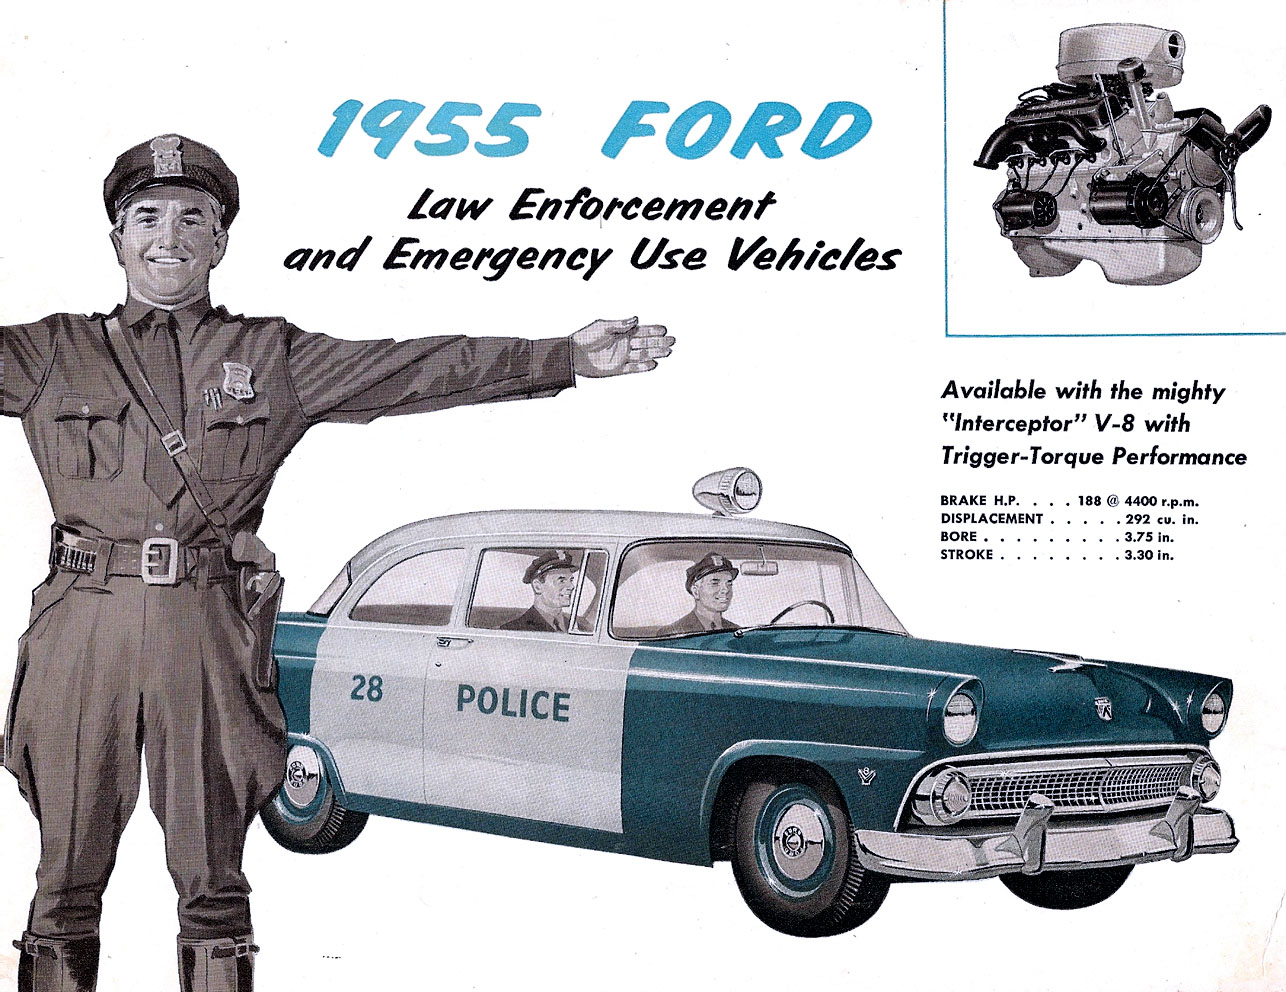 n_1955 Ford Emergency Vehicles-01.jpg